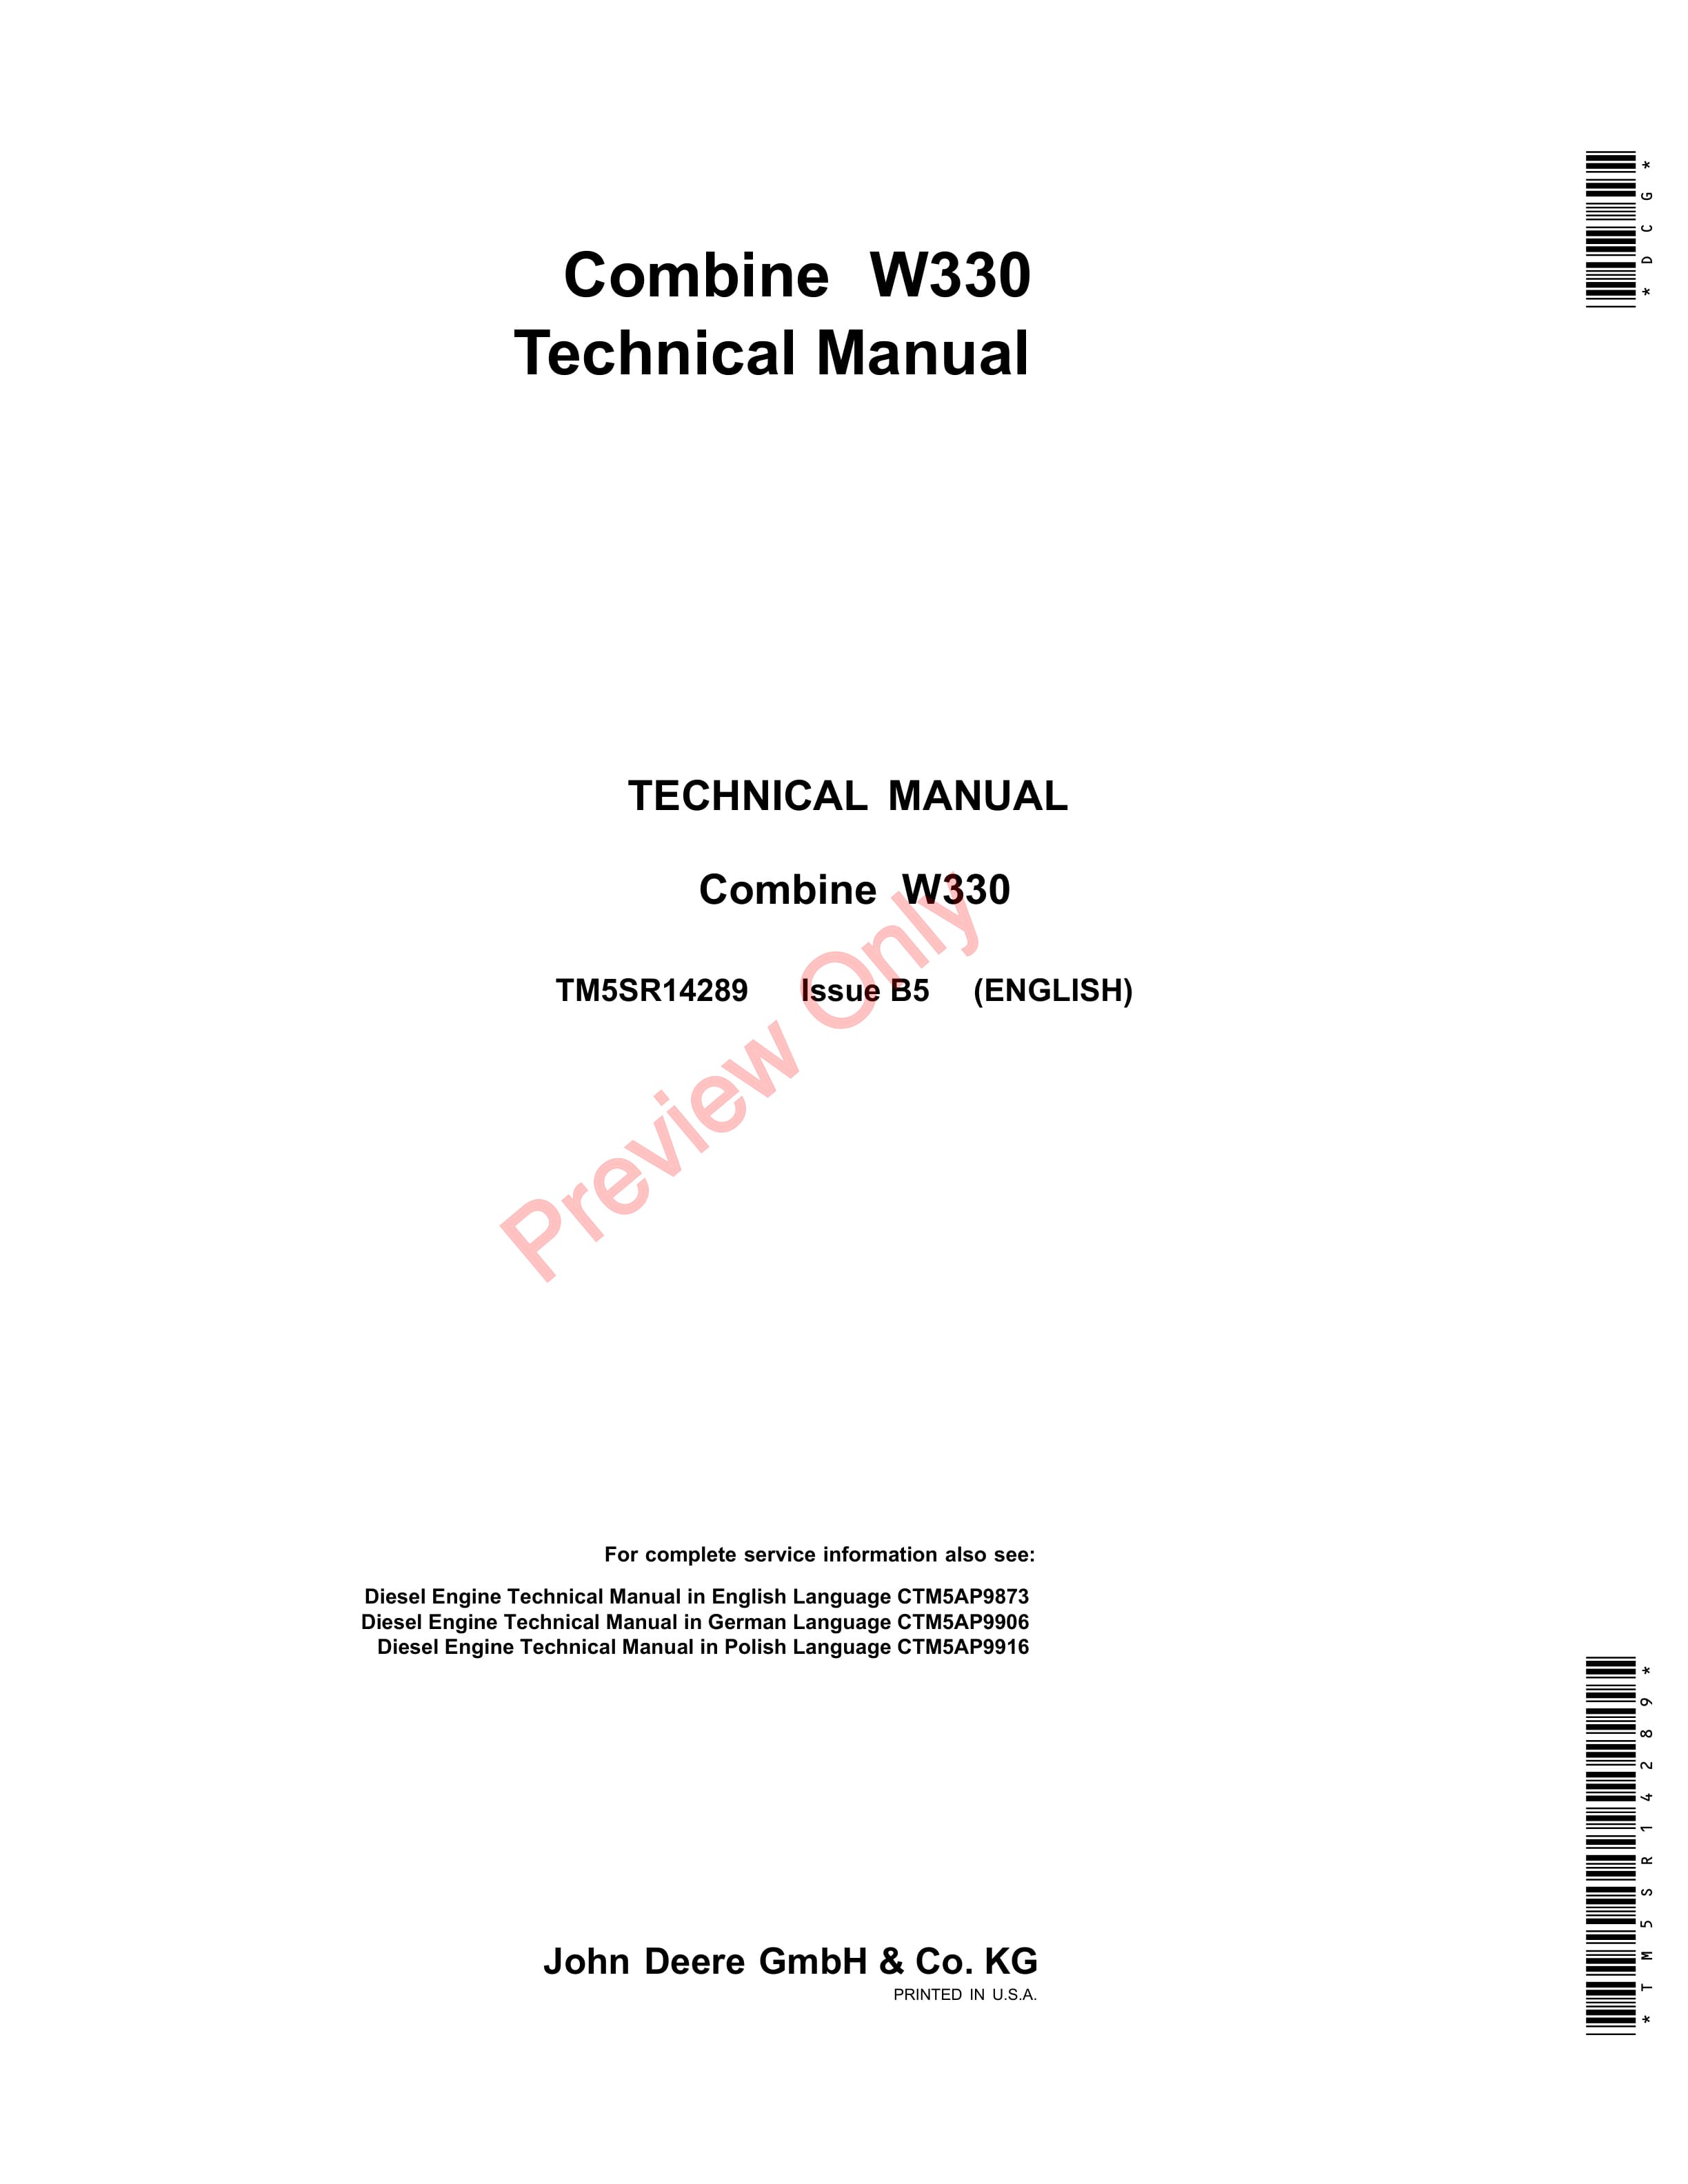 John Deere W330 Combines Technical Manual TM5SR14289 01JUN16 1